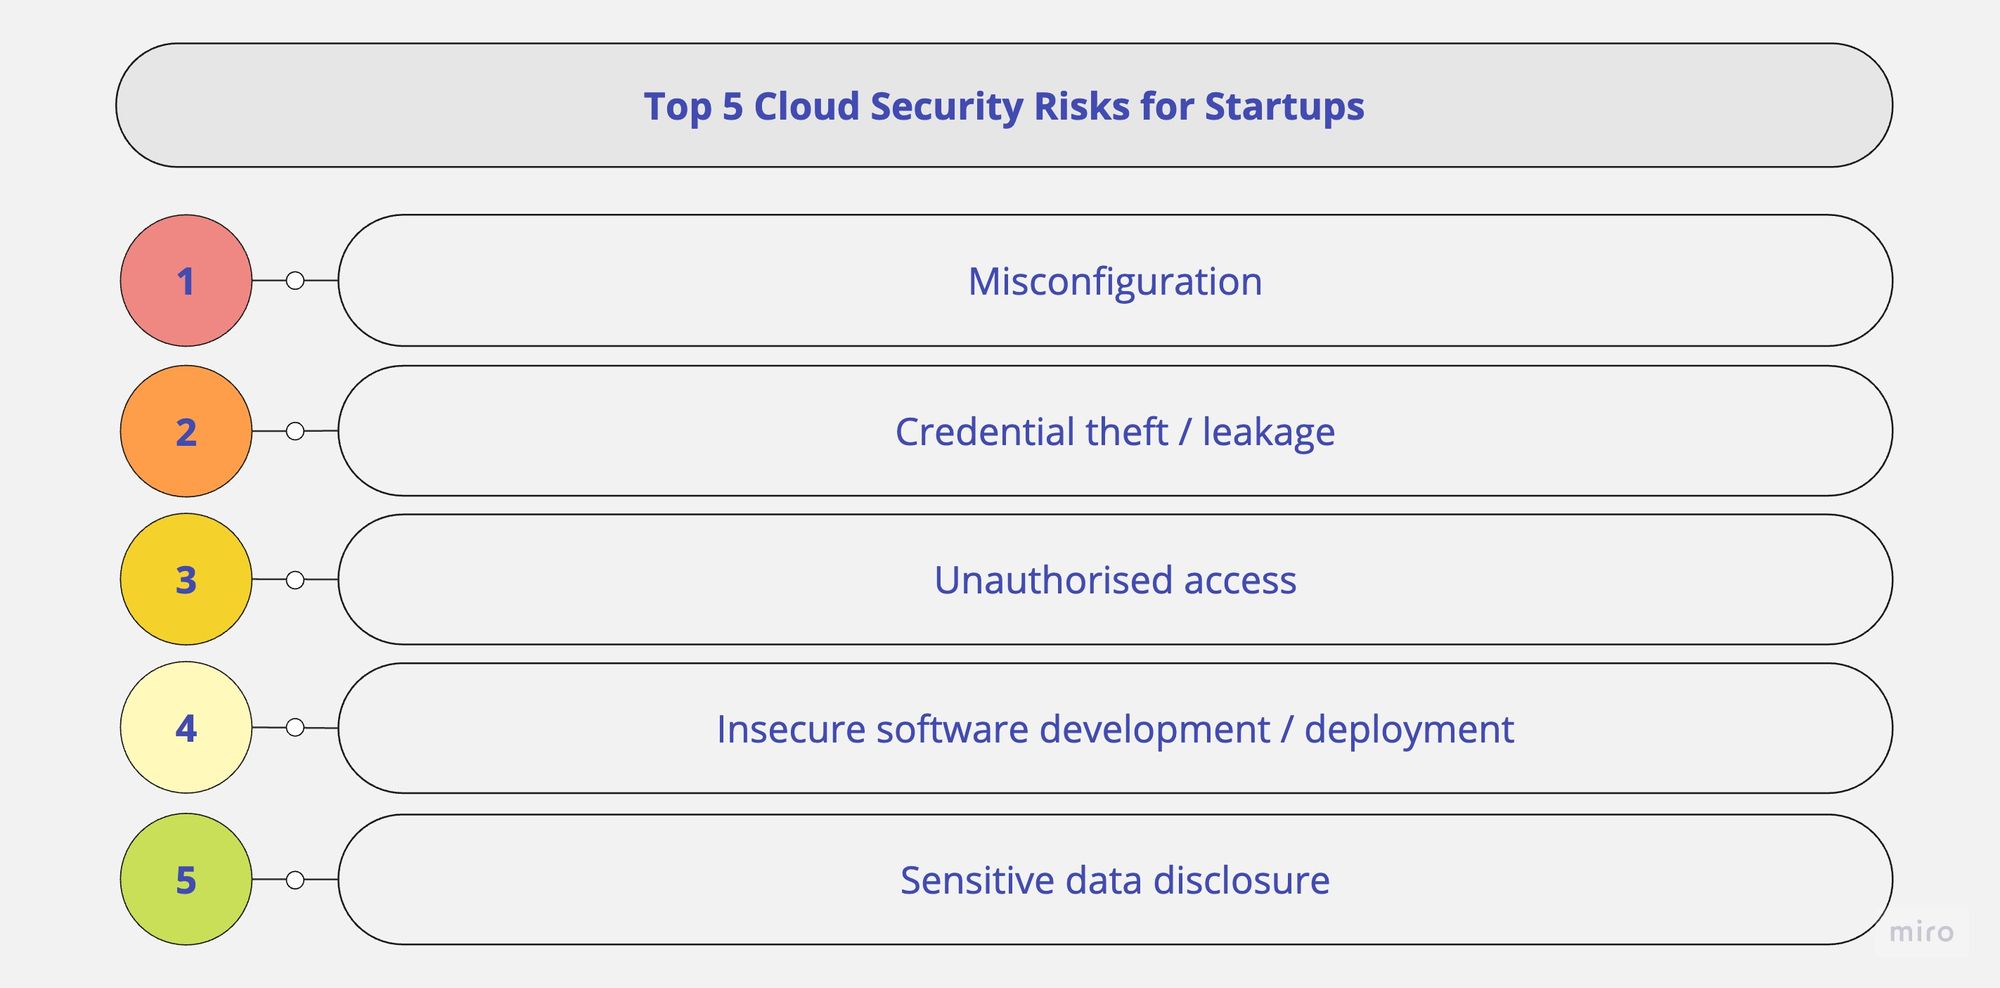 Top 5 Cloud Security Risks for Startups